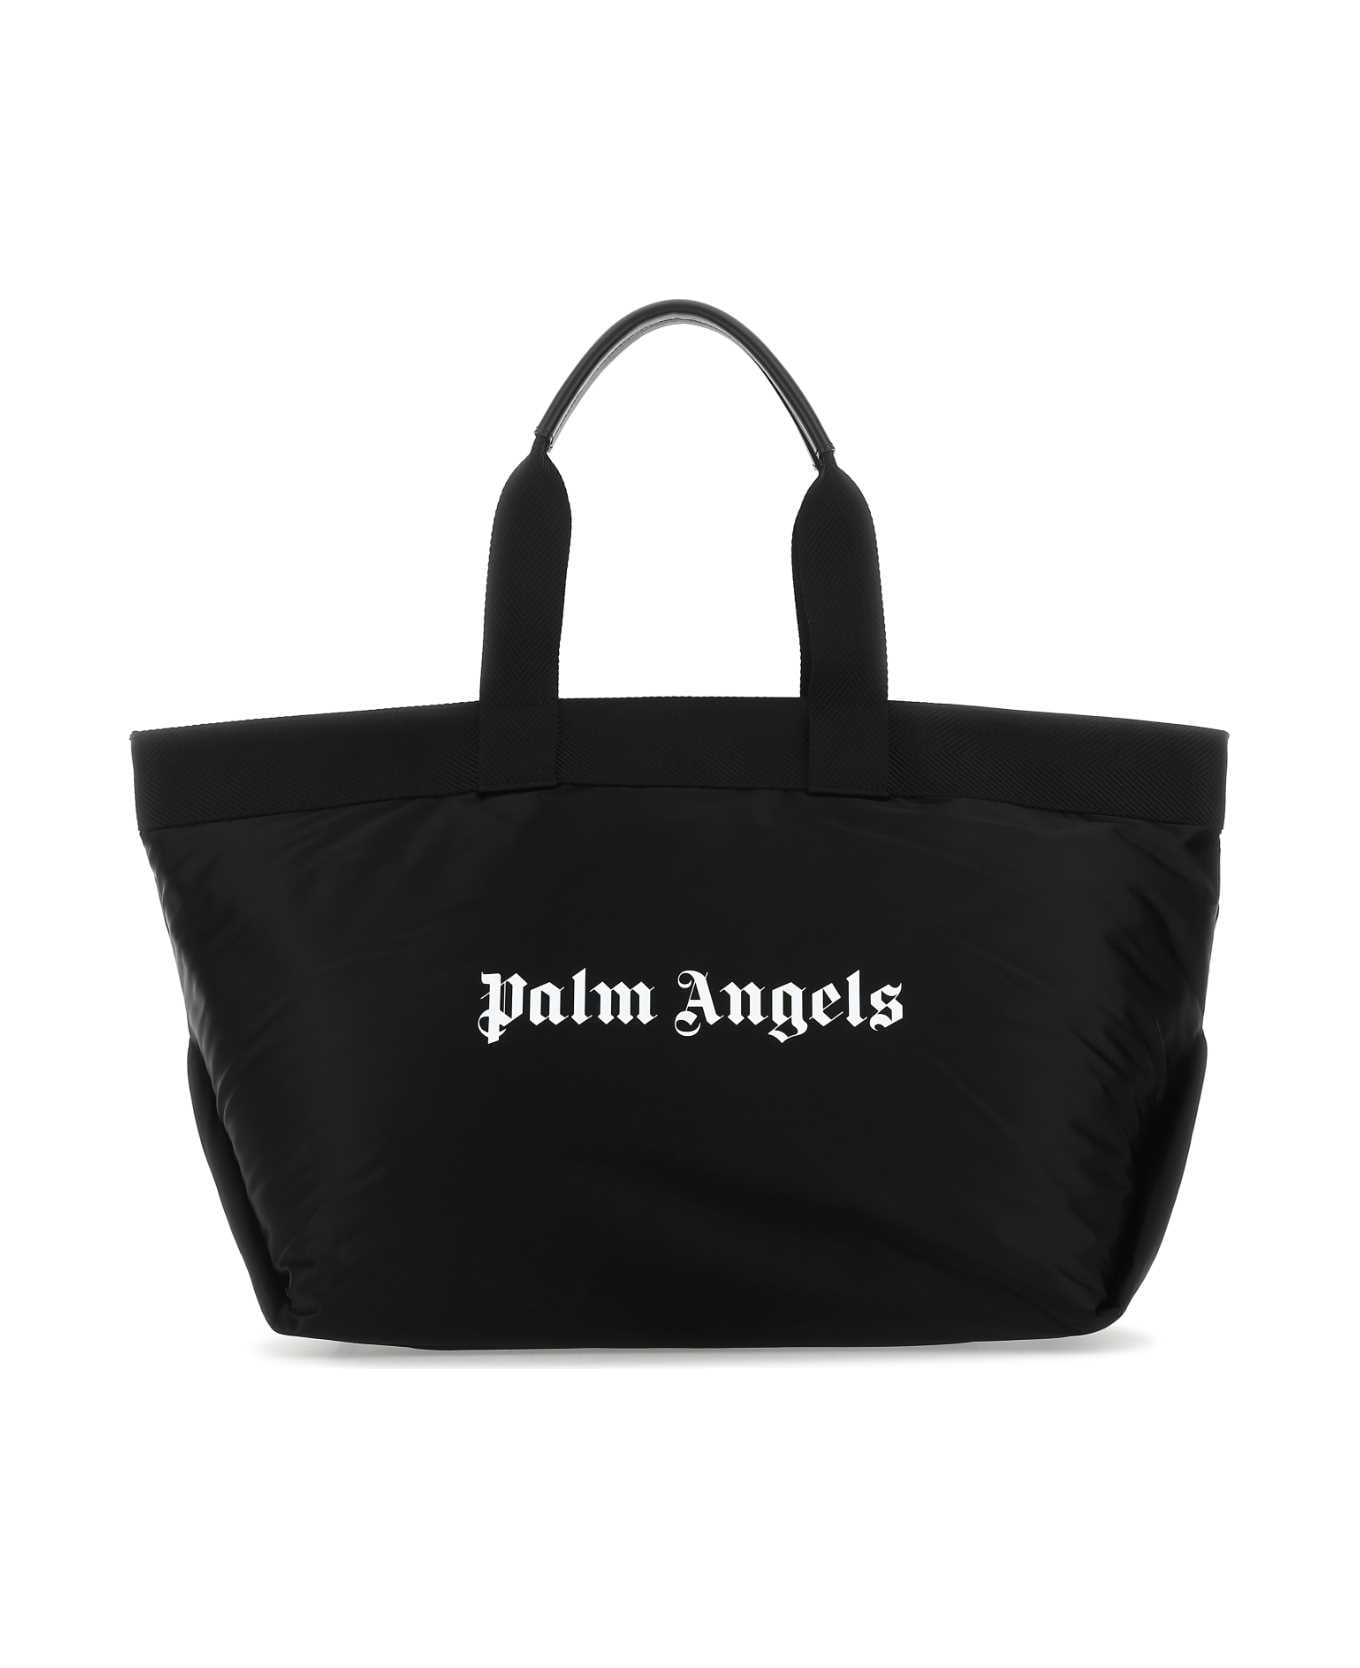 Palm Angels Black Fabric Shopping Bag - 1001